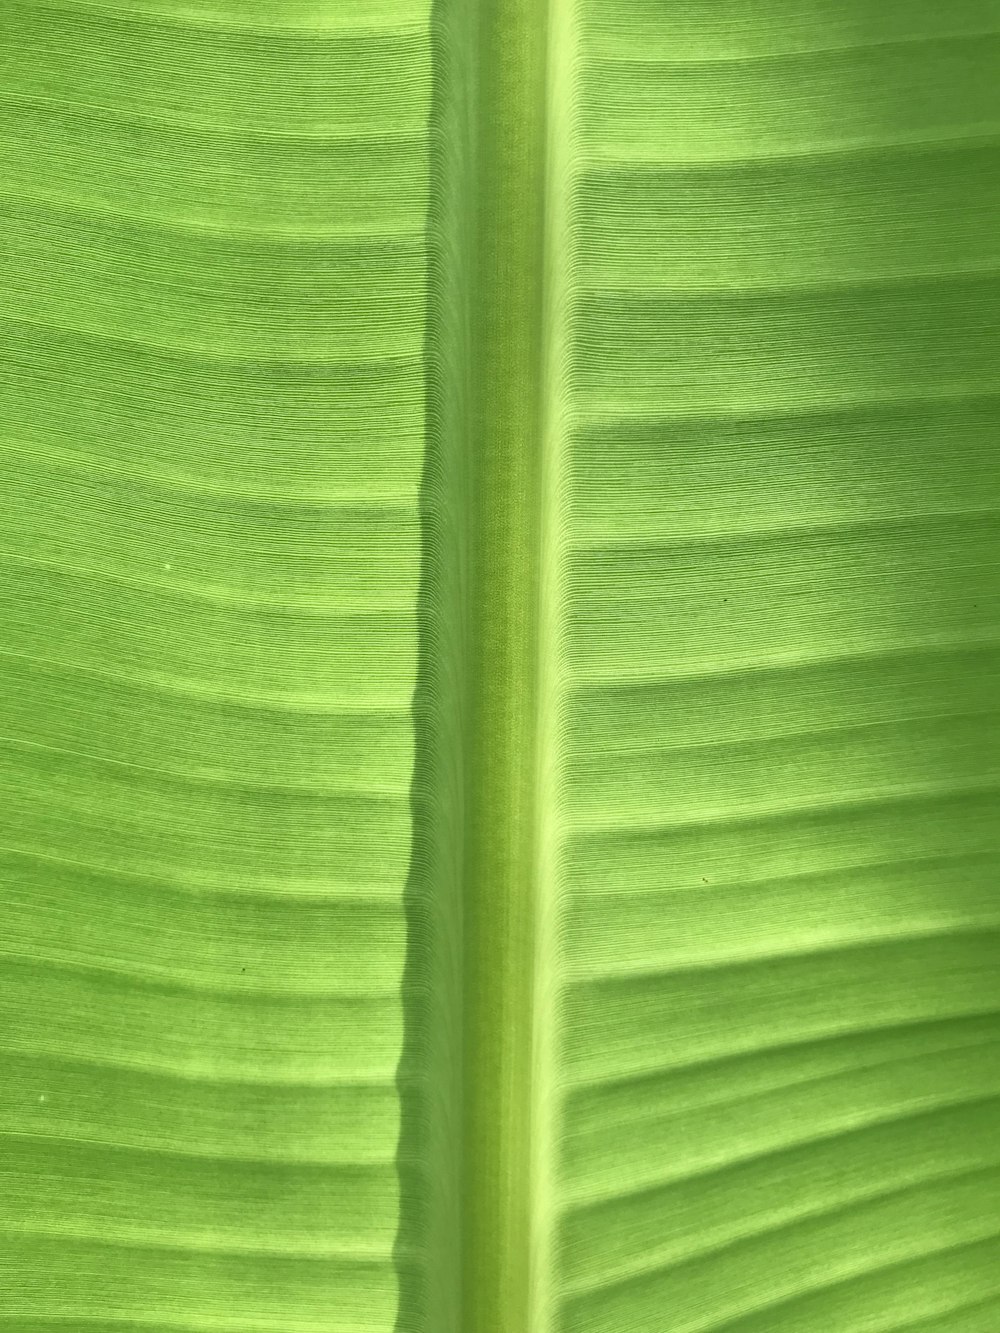 Nahaufnahme eines grünen Bananenblattes